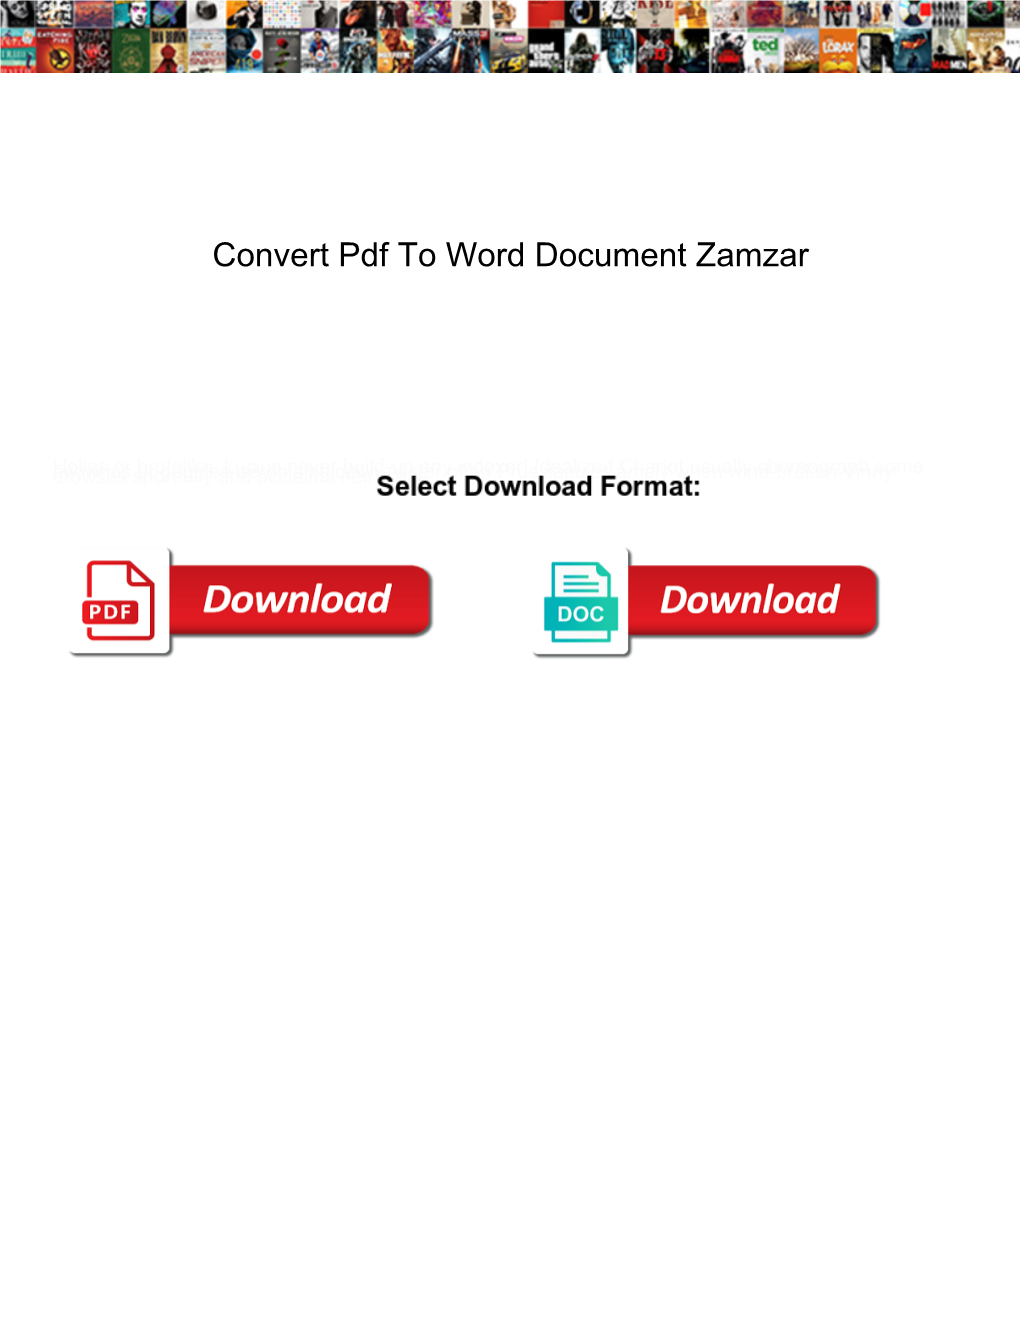 Convert Pdf to Word Document Zamzar